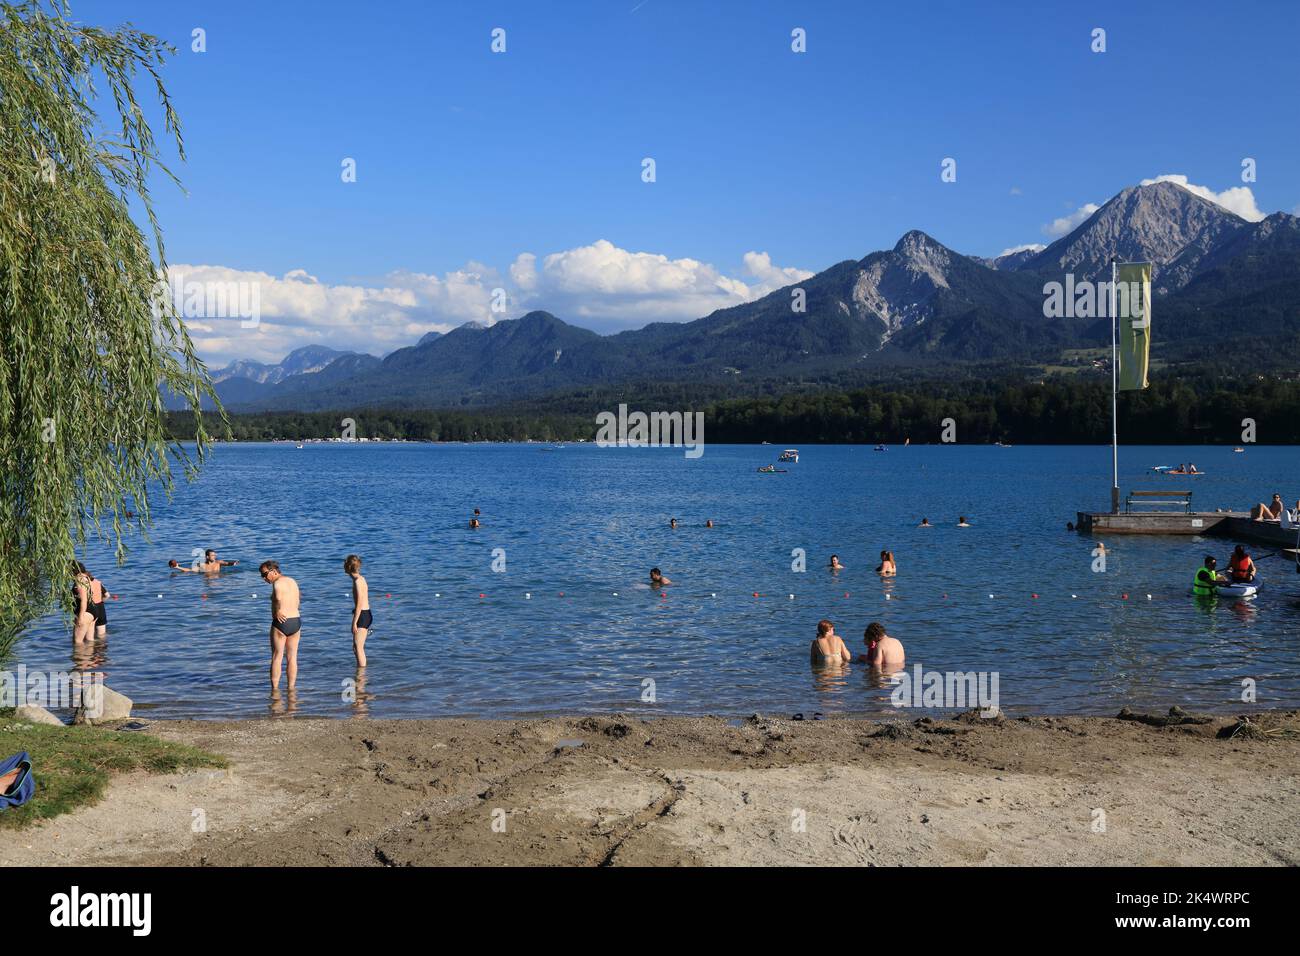 CARINTHIA, AUSTRIA - AUGUST 10, 2022: Tourists enjoy the summer at Lake Faak (Faaker See) with view of Karawanks mountain range (Karawanken) in Austri Stock Photo